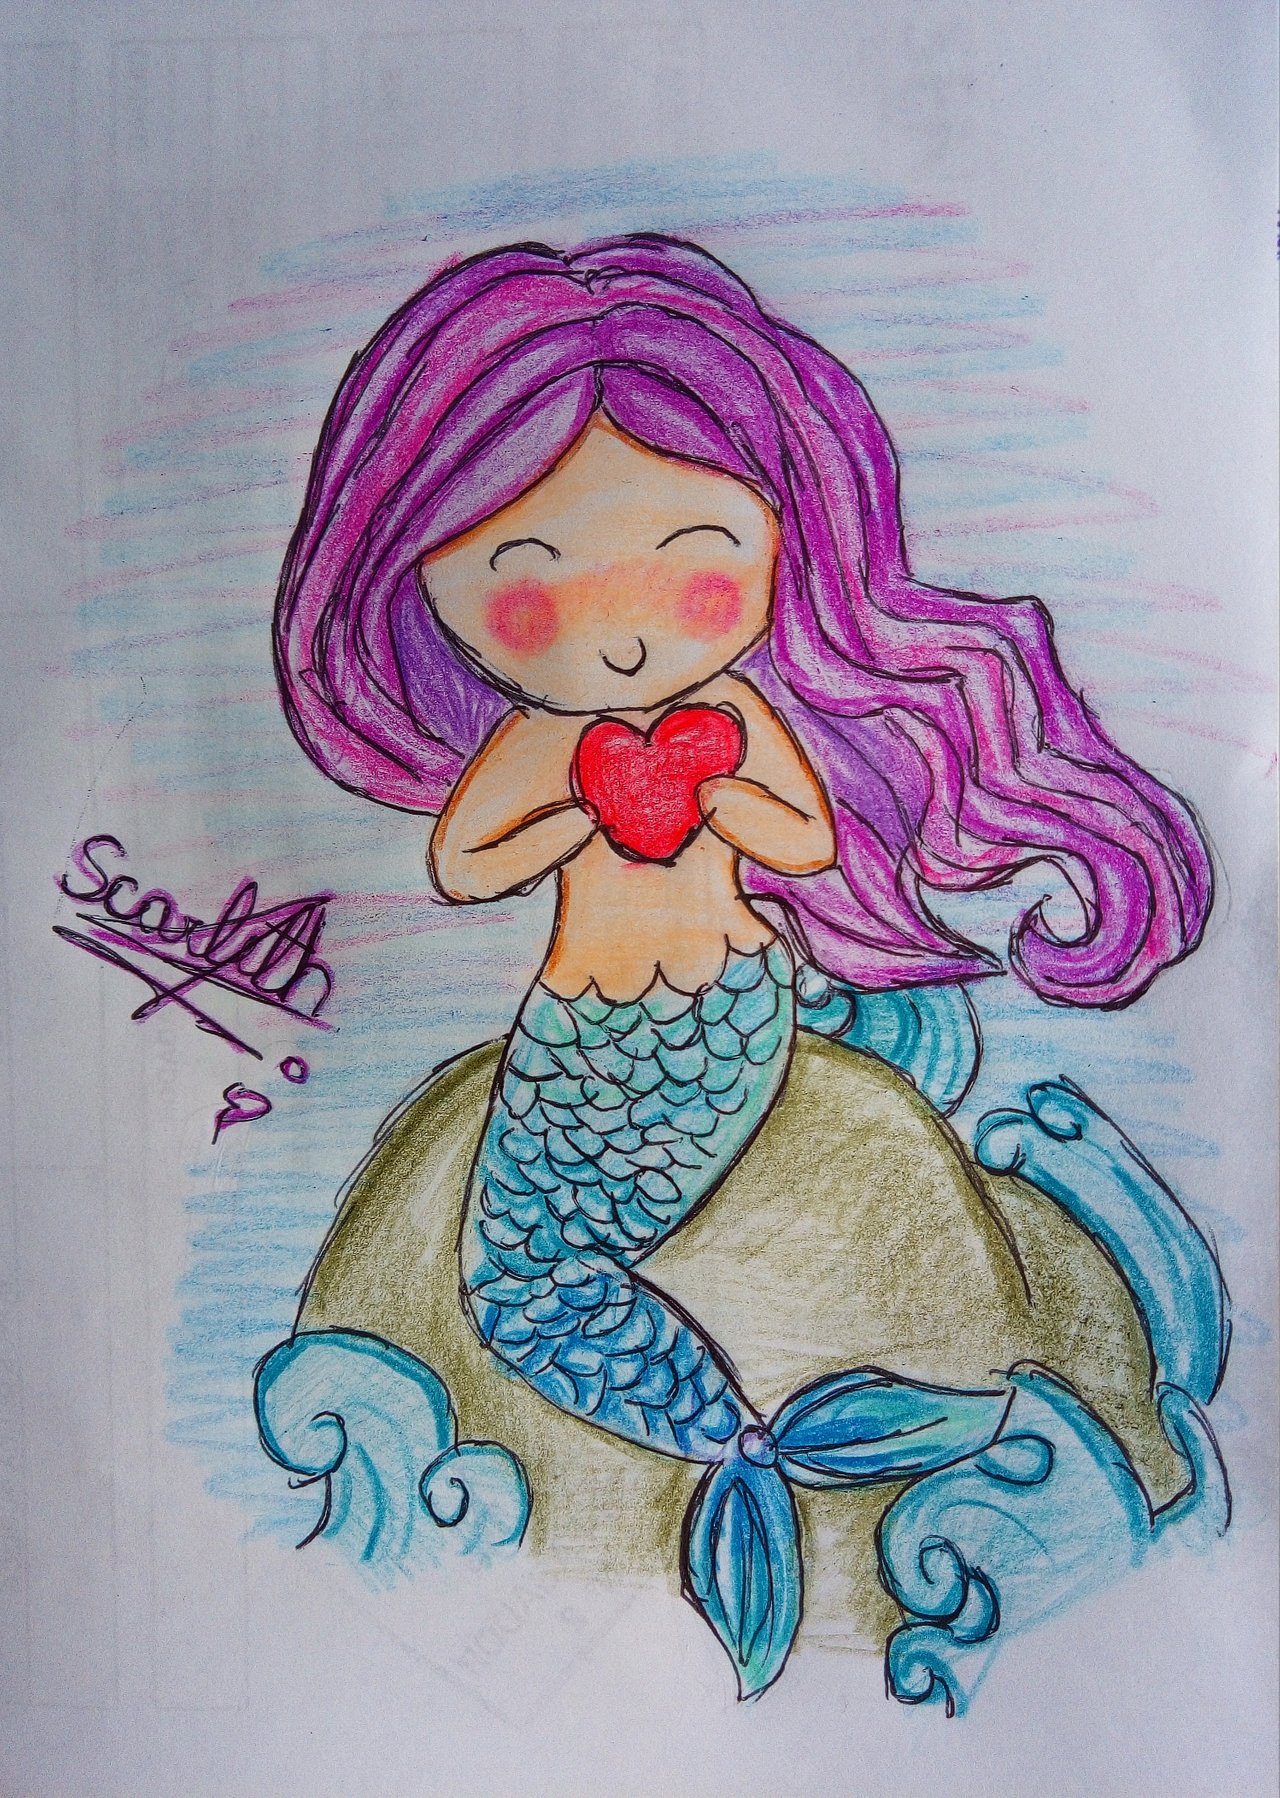 Esp-Eng] Cute mermaid|-|New Drawing|-|By @scasofia030 | PeakD